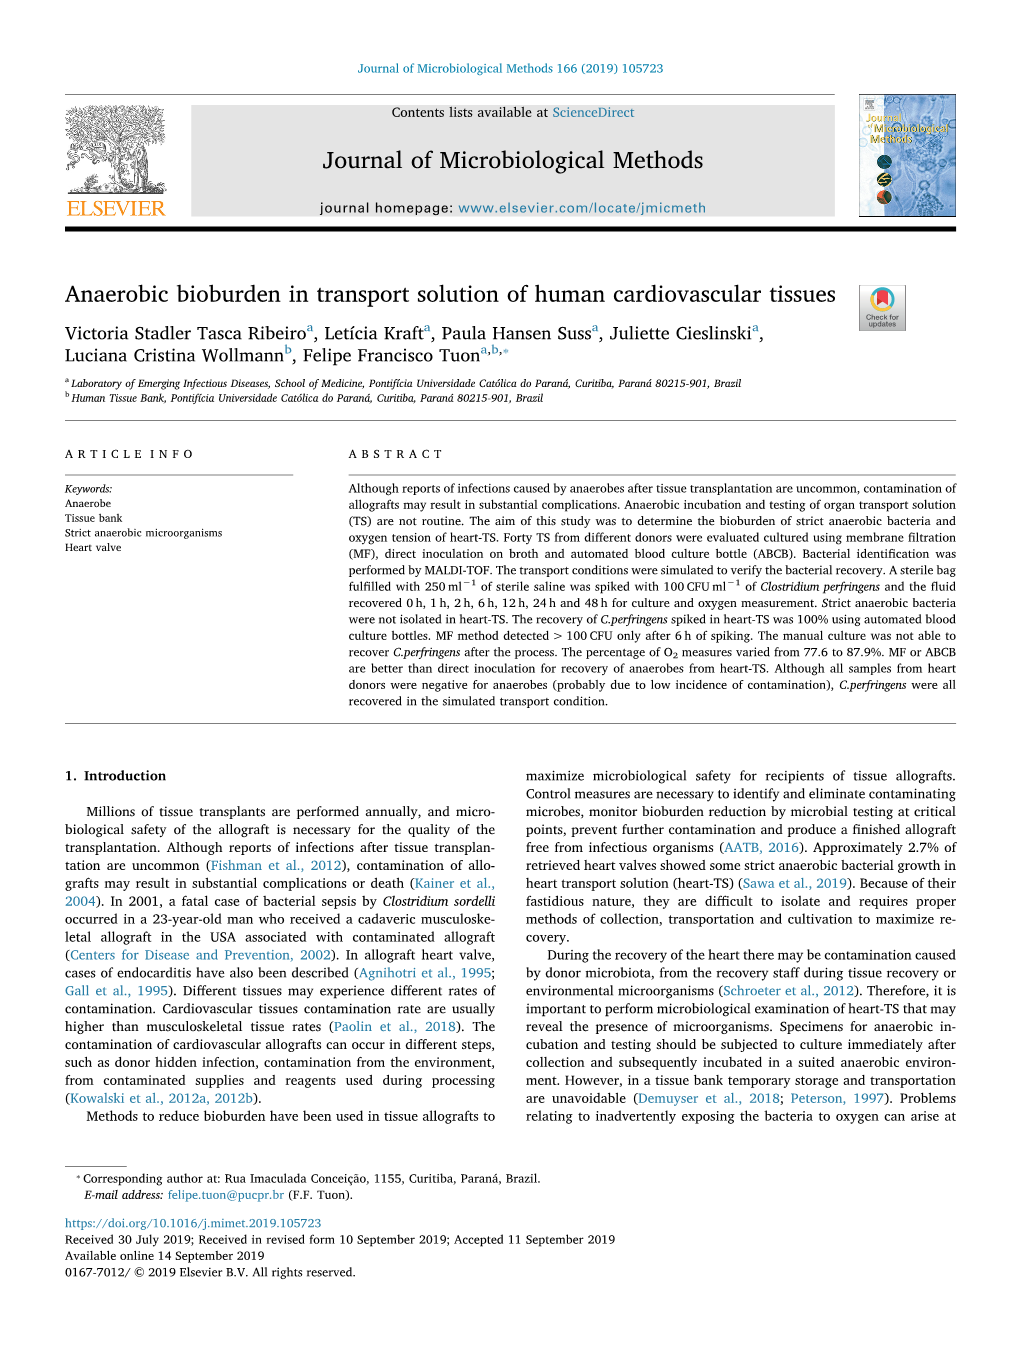 Journal of Microbiological Methods Anaerobic Bioburden in Transport